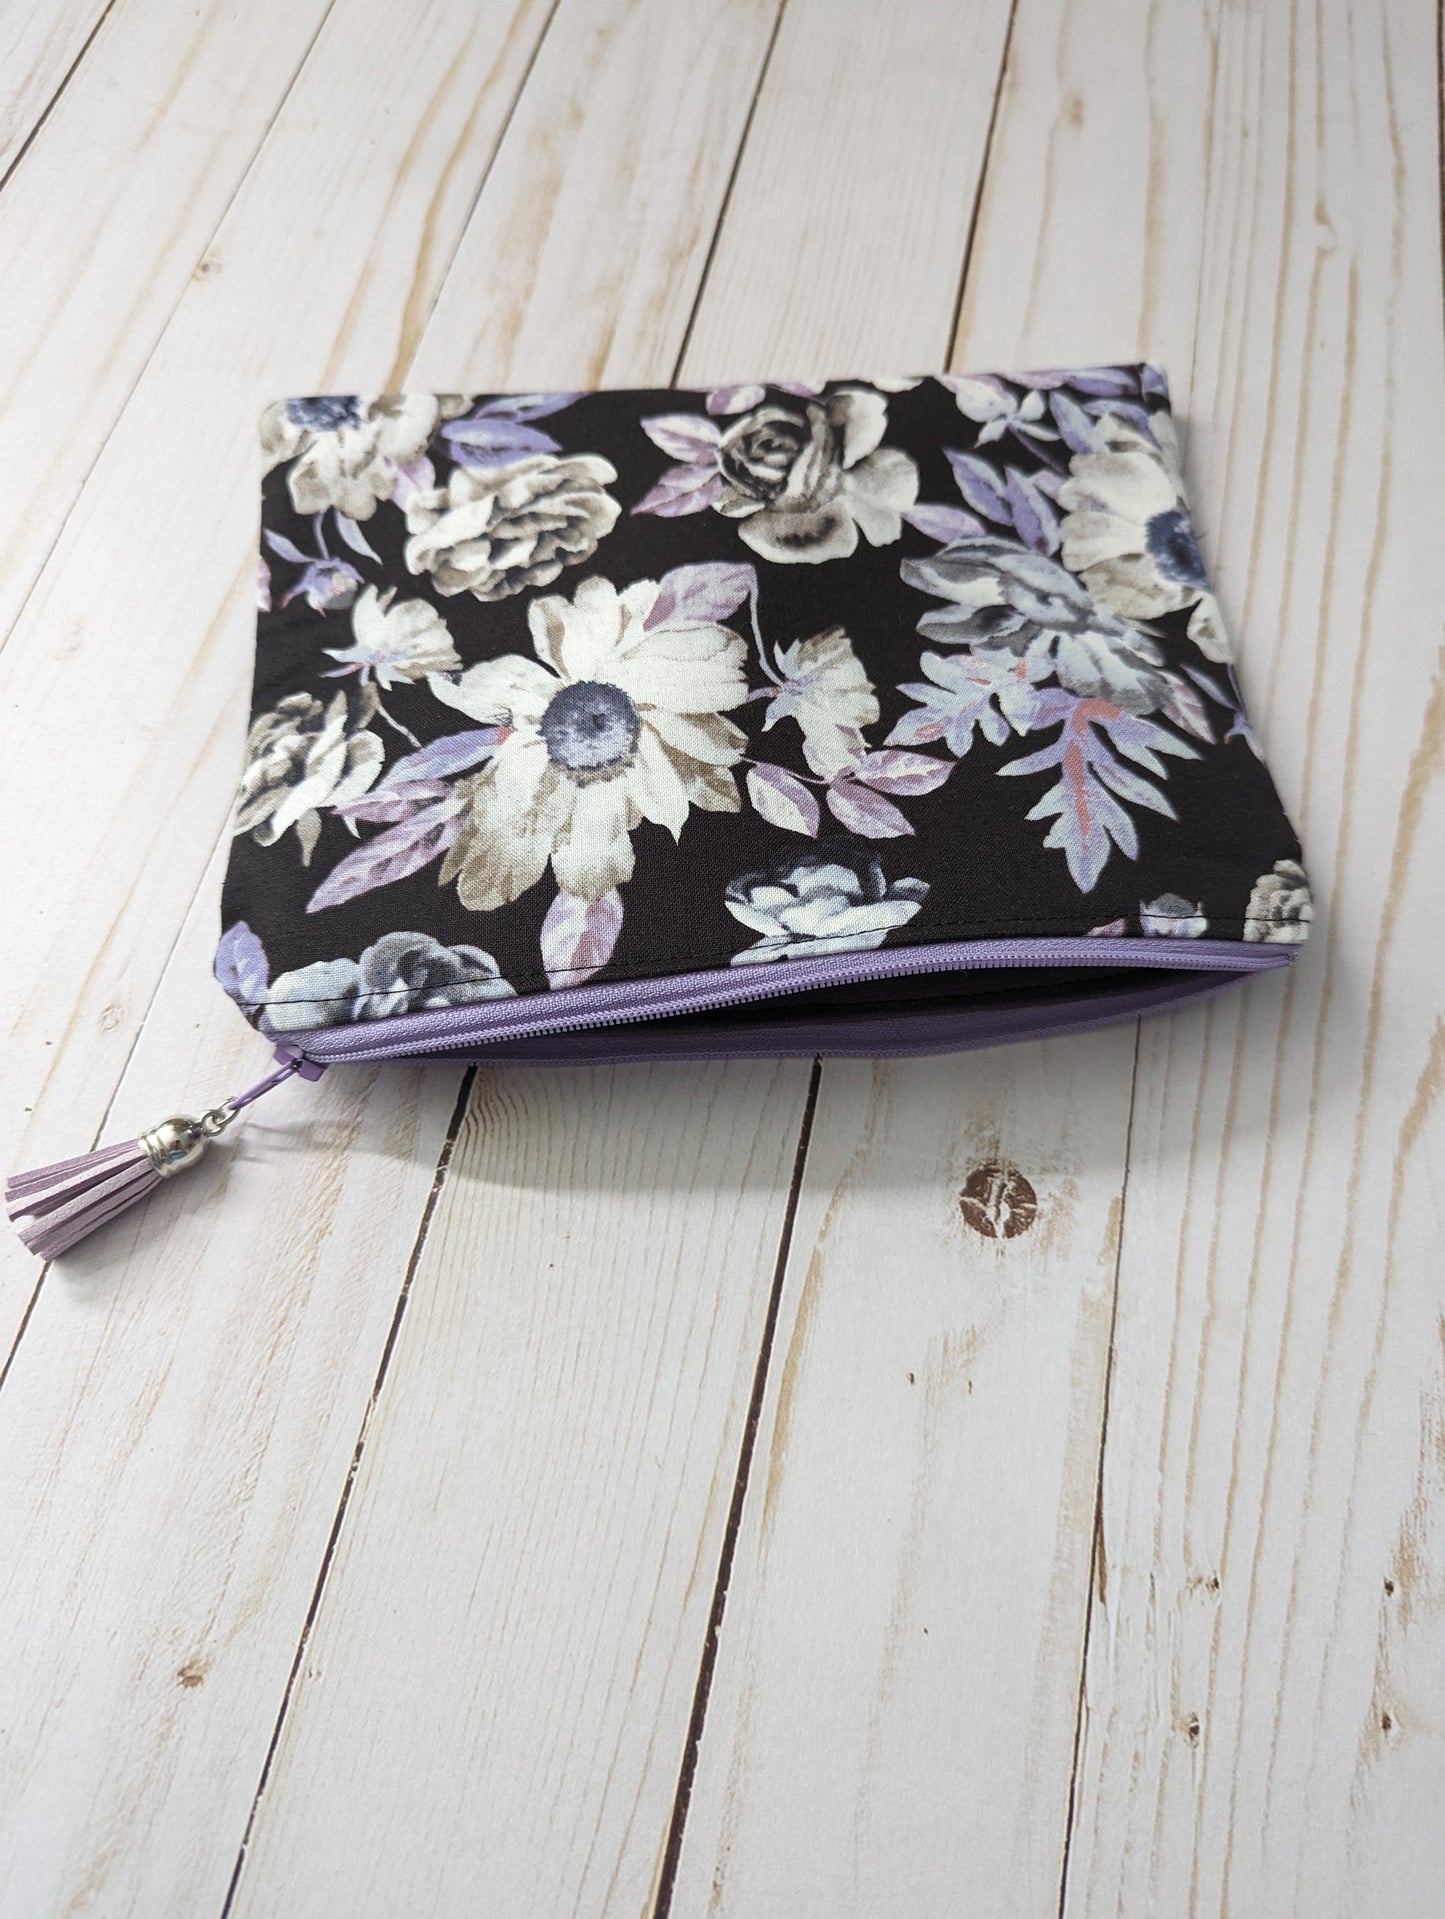 Zipper Bag - Black with Gray & Purple Flowers